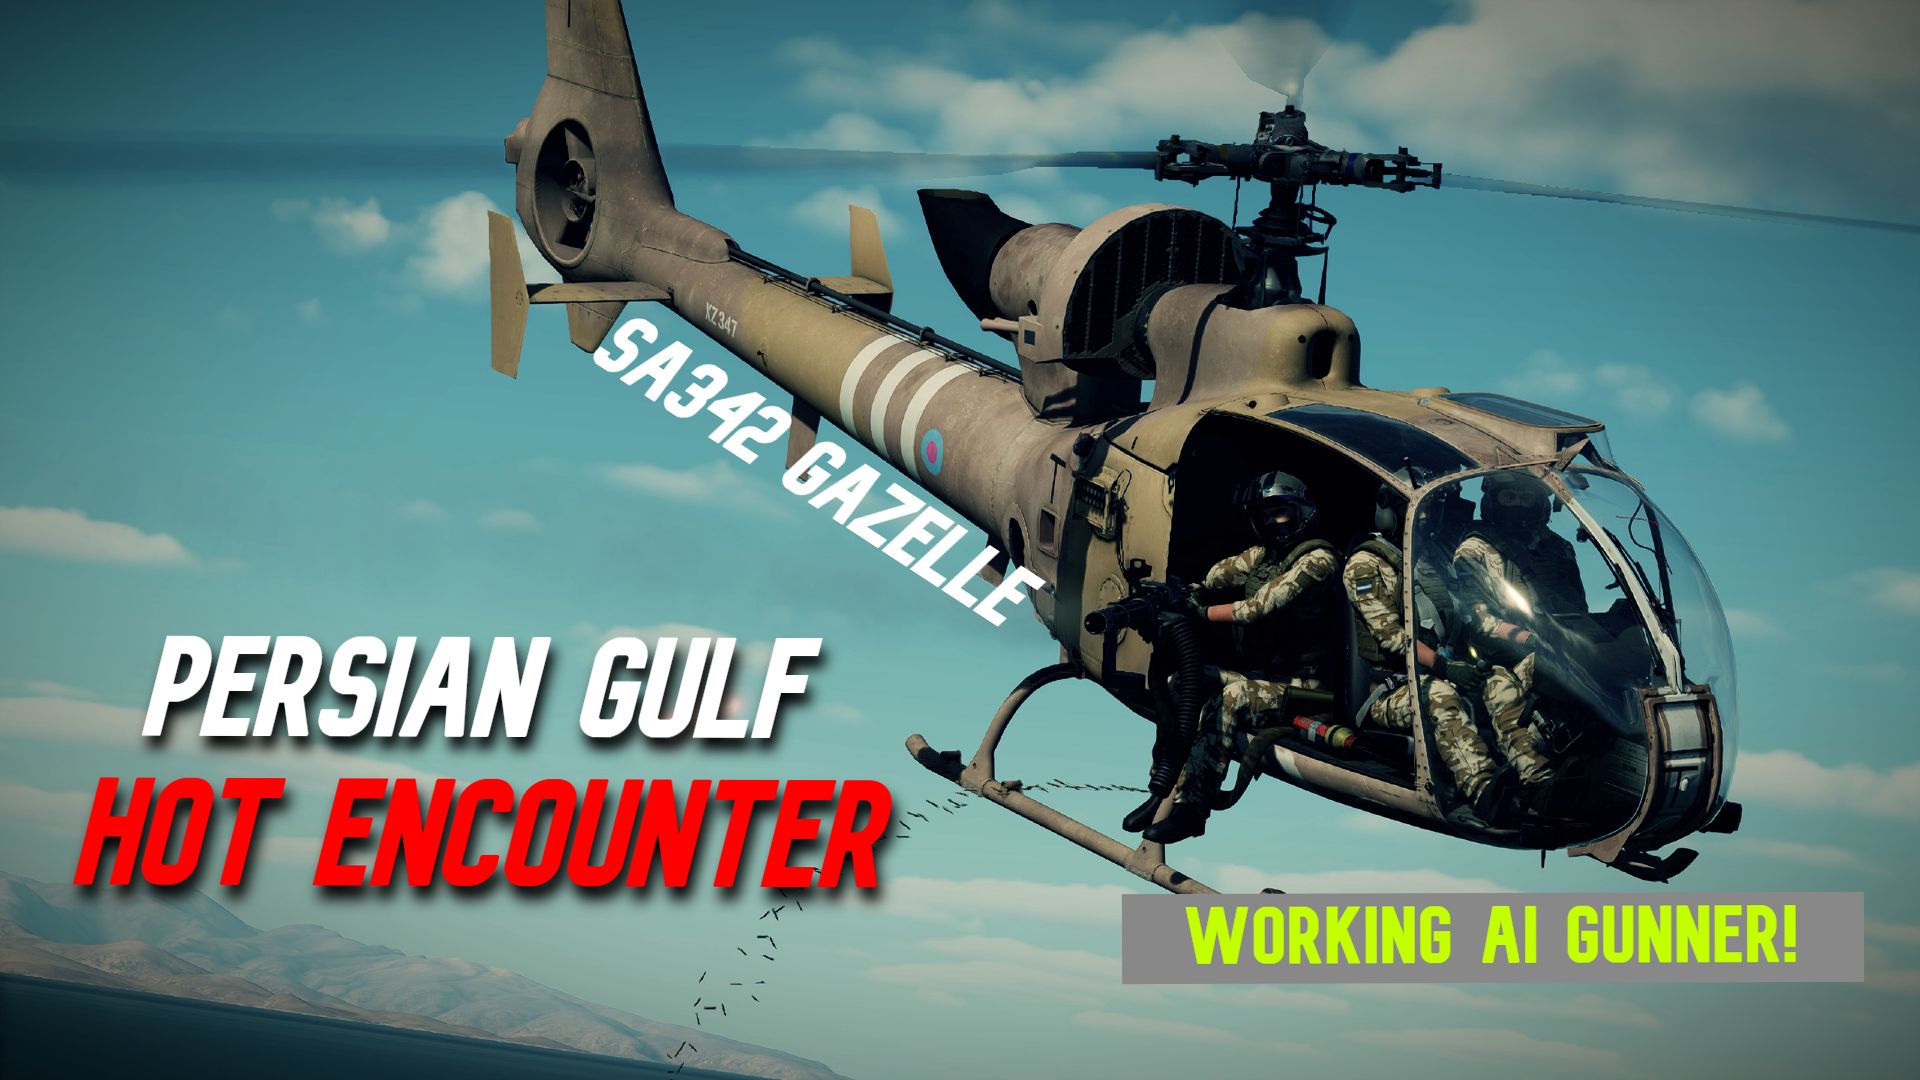 UK Army Gazelle Prevent IRGC Hijack Attempt In Strait of Hormuz